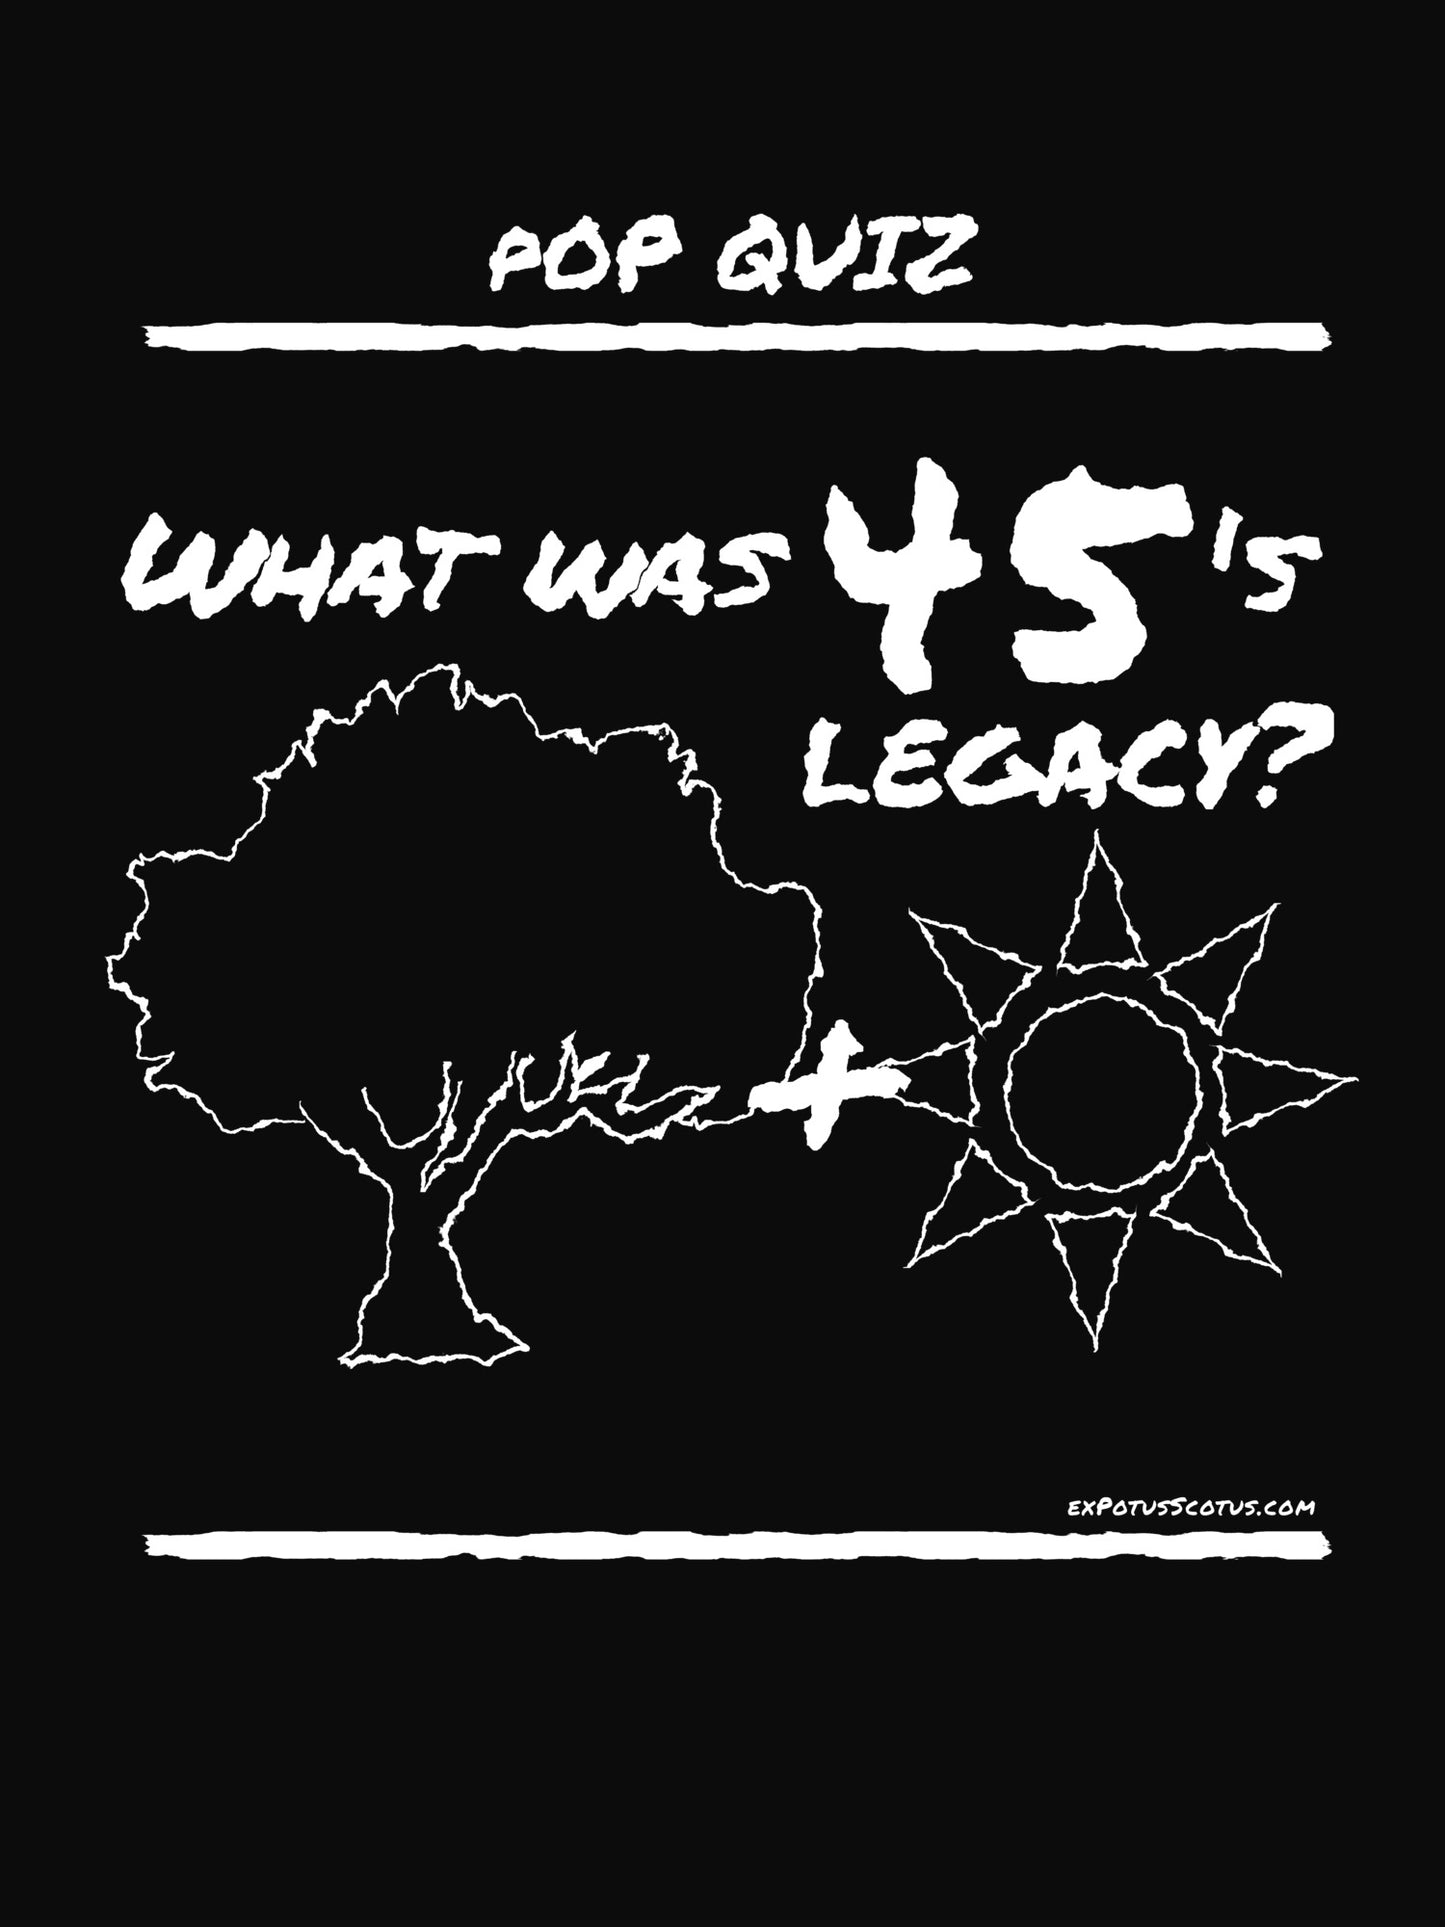 Pop Quiz 45's Legacy Unisex t-shirt